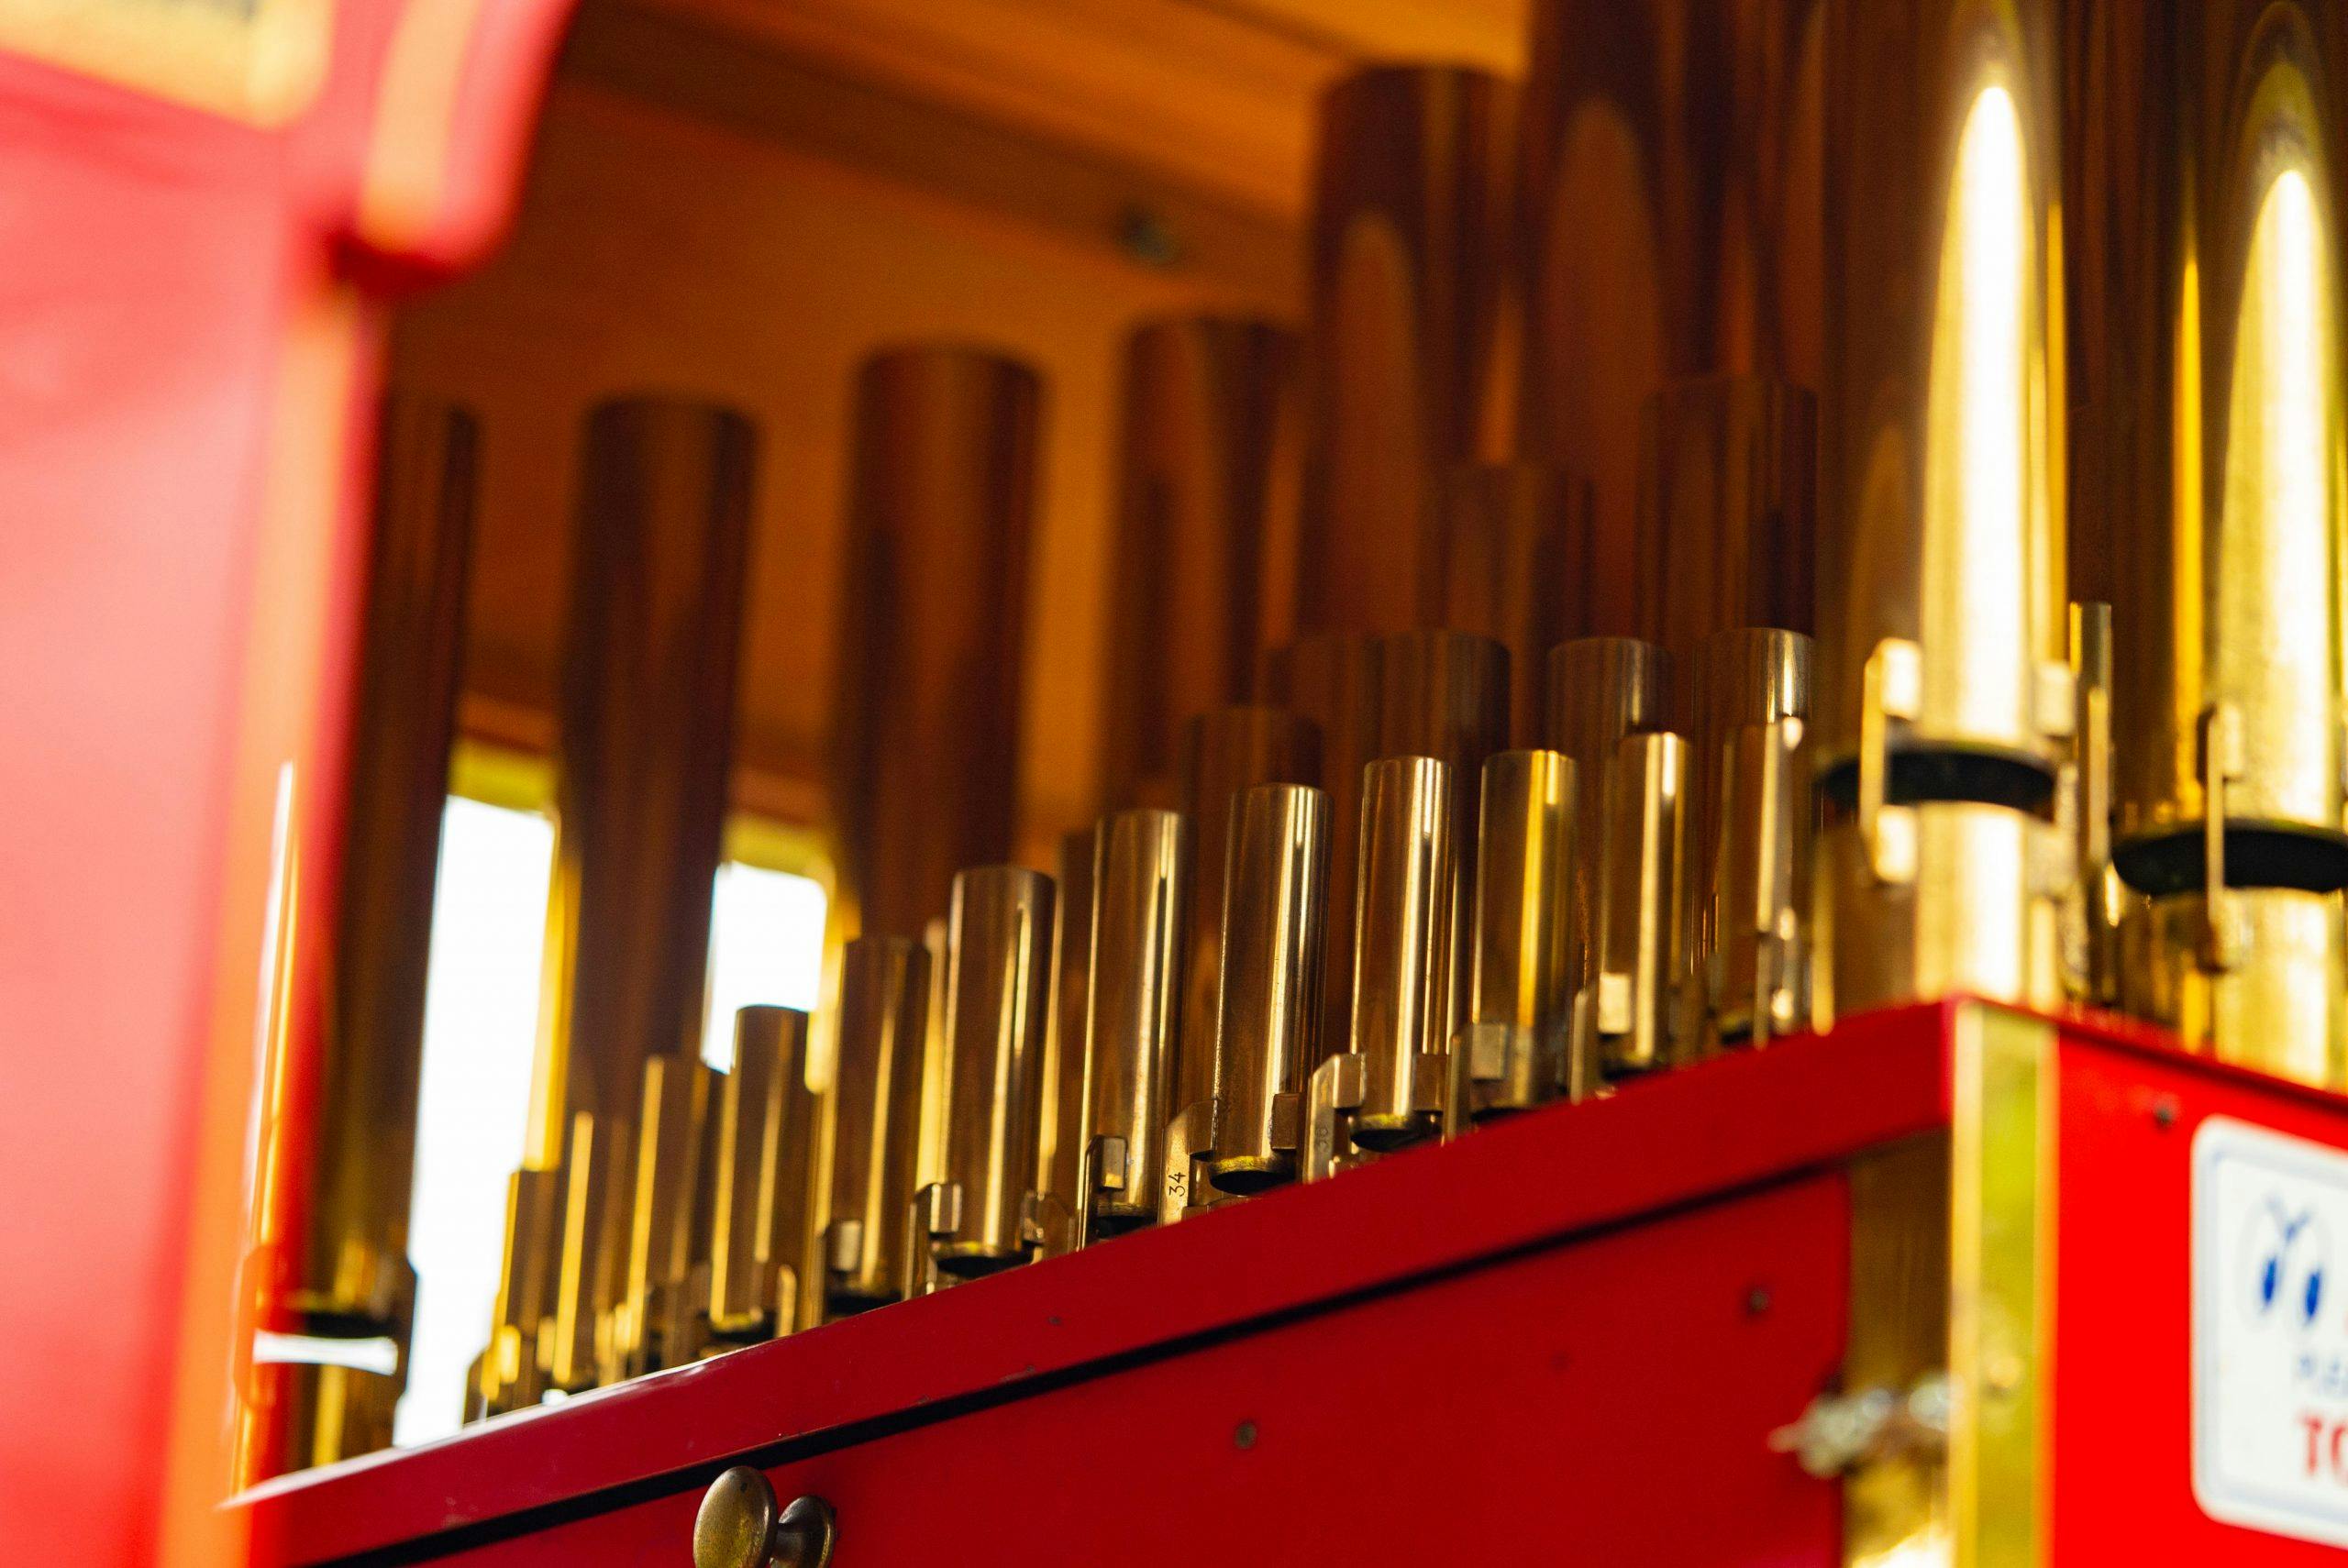 Ford Model T Organ Car pipes